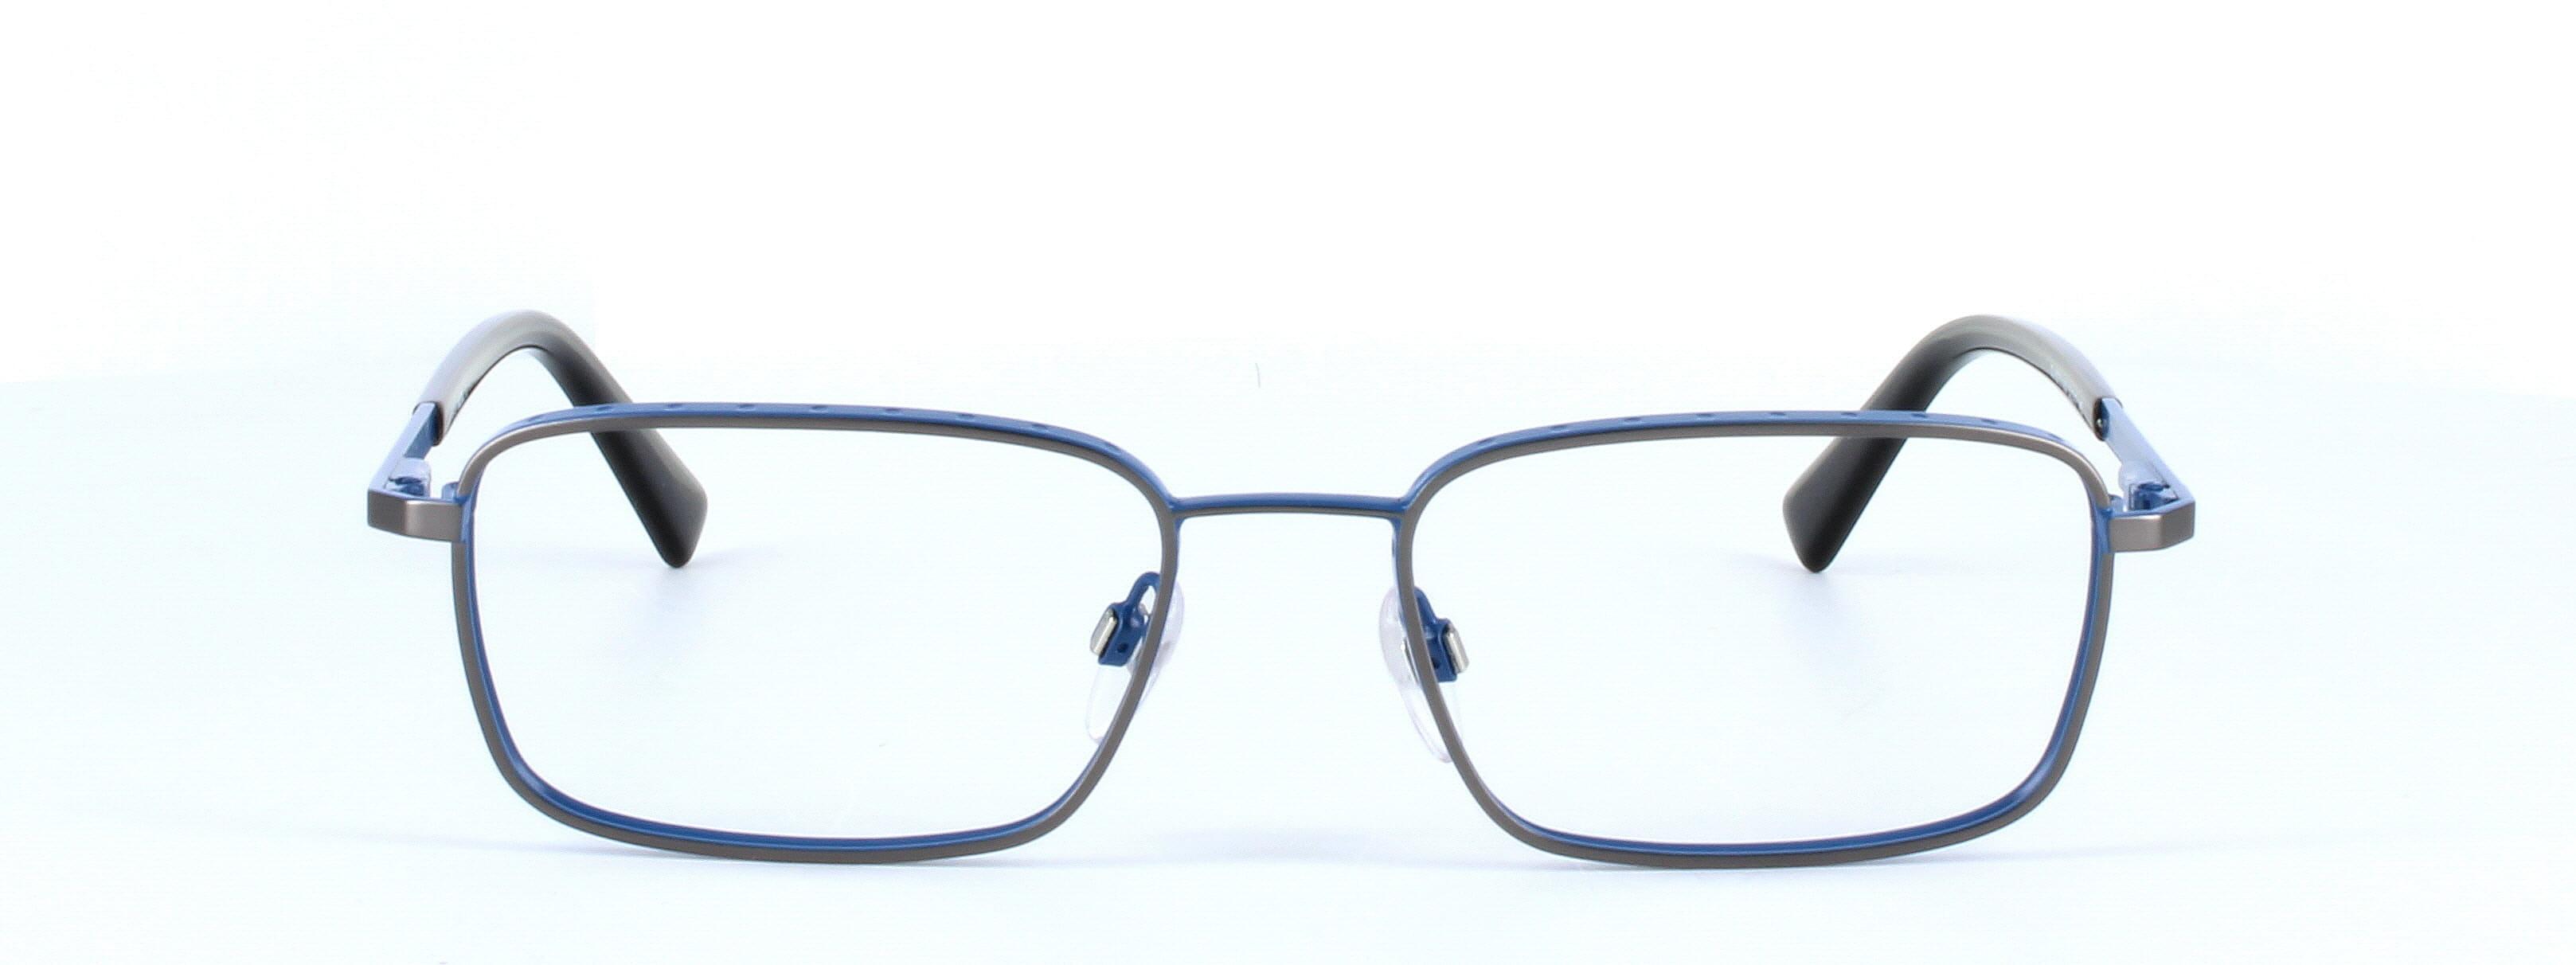 Diesel 5273 - Unisex designer glasses - 2 tone full rim rectangular shaped metal frame on gunmetal and blue - image view 5